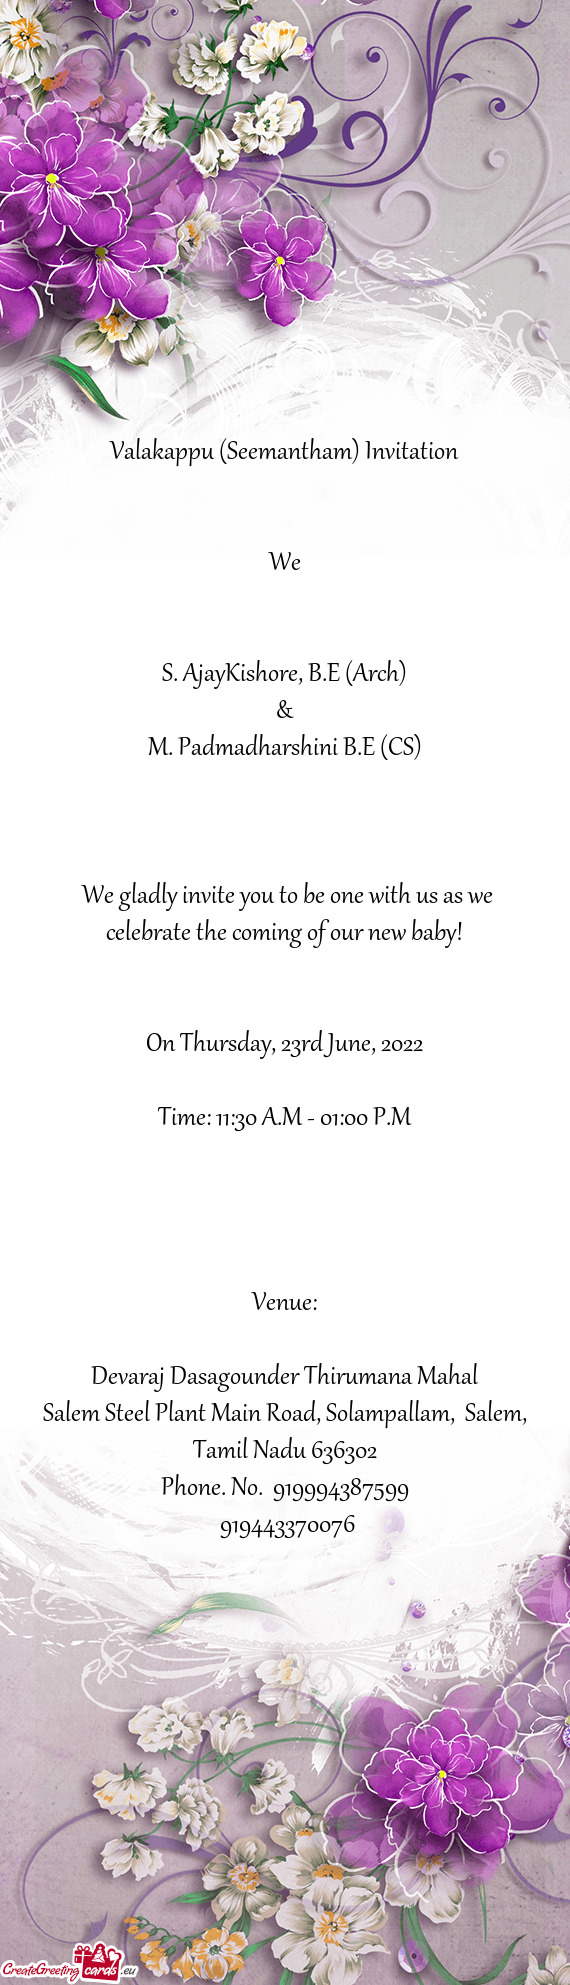 Valakappu (Seemantham) Invitation  We  S